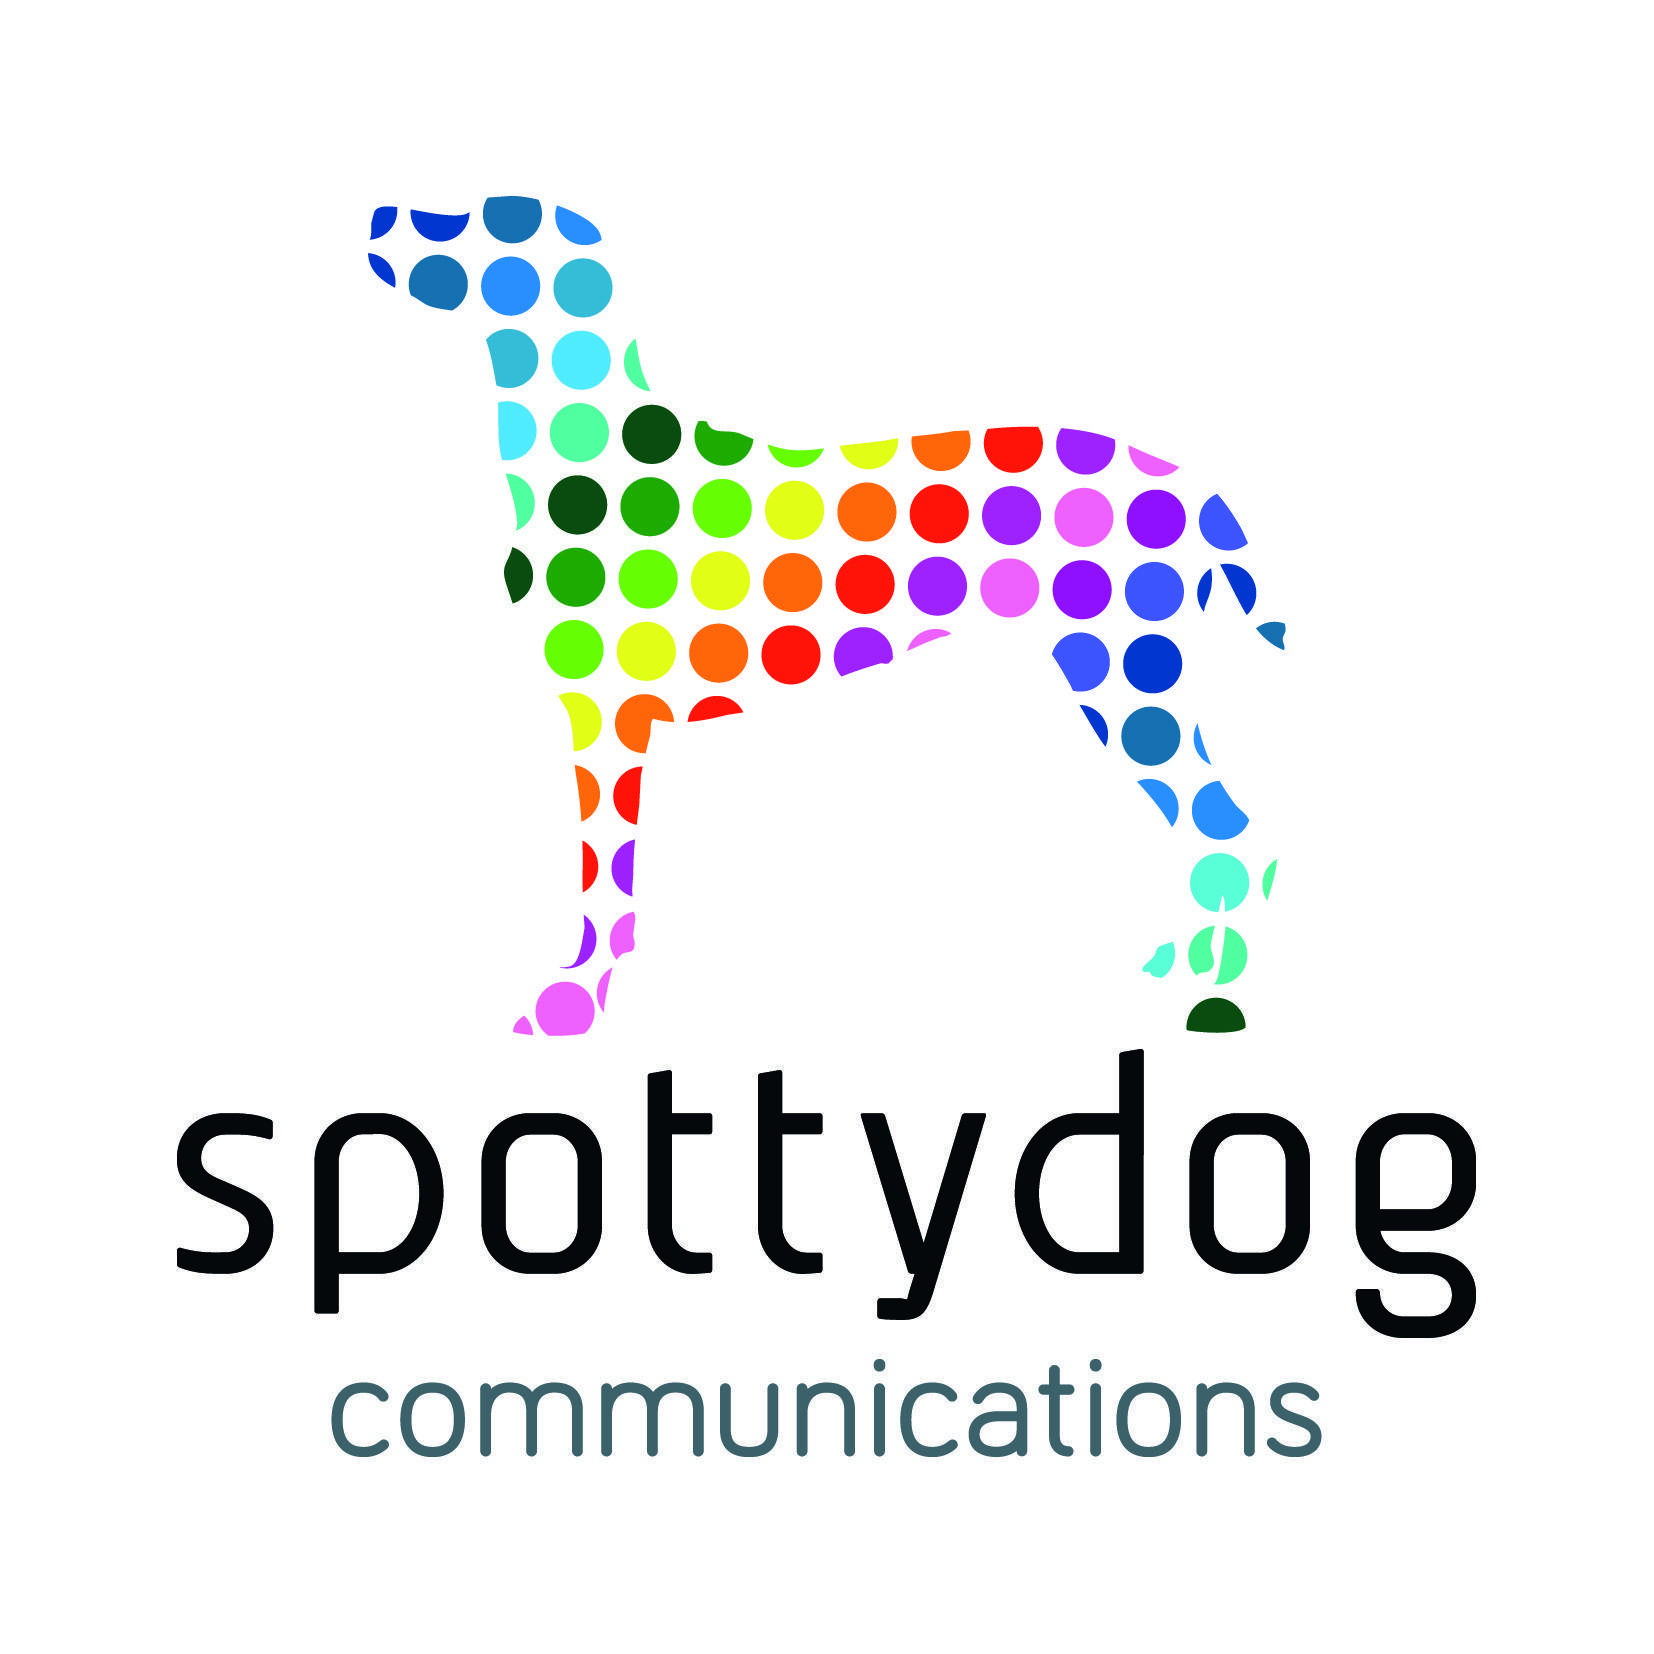 Communications Logo - spottydog communications | Midlands based communications agency